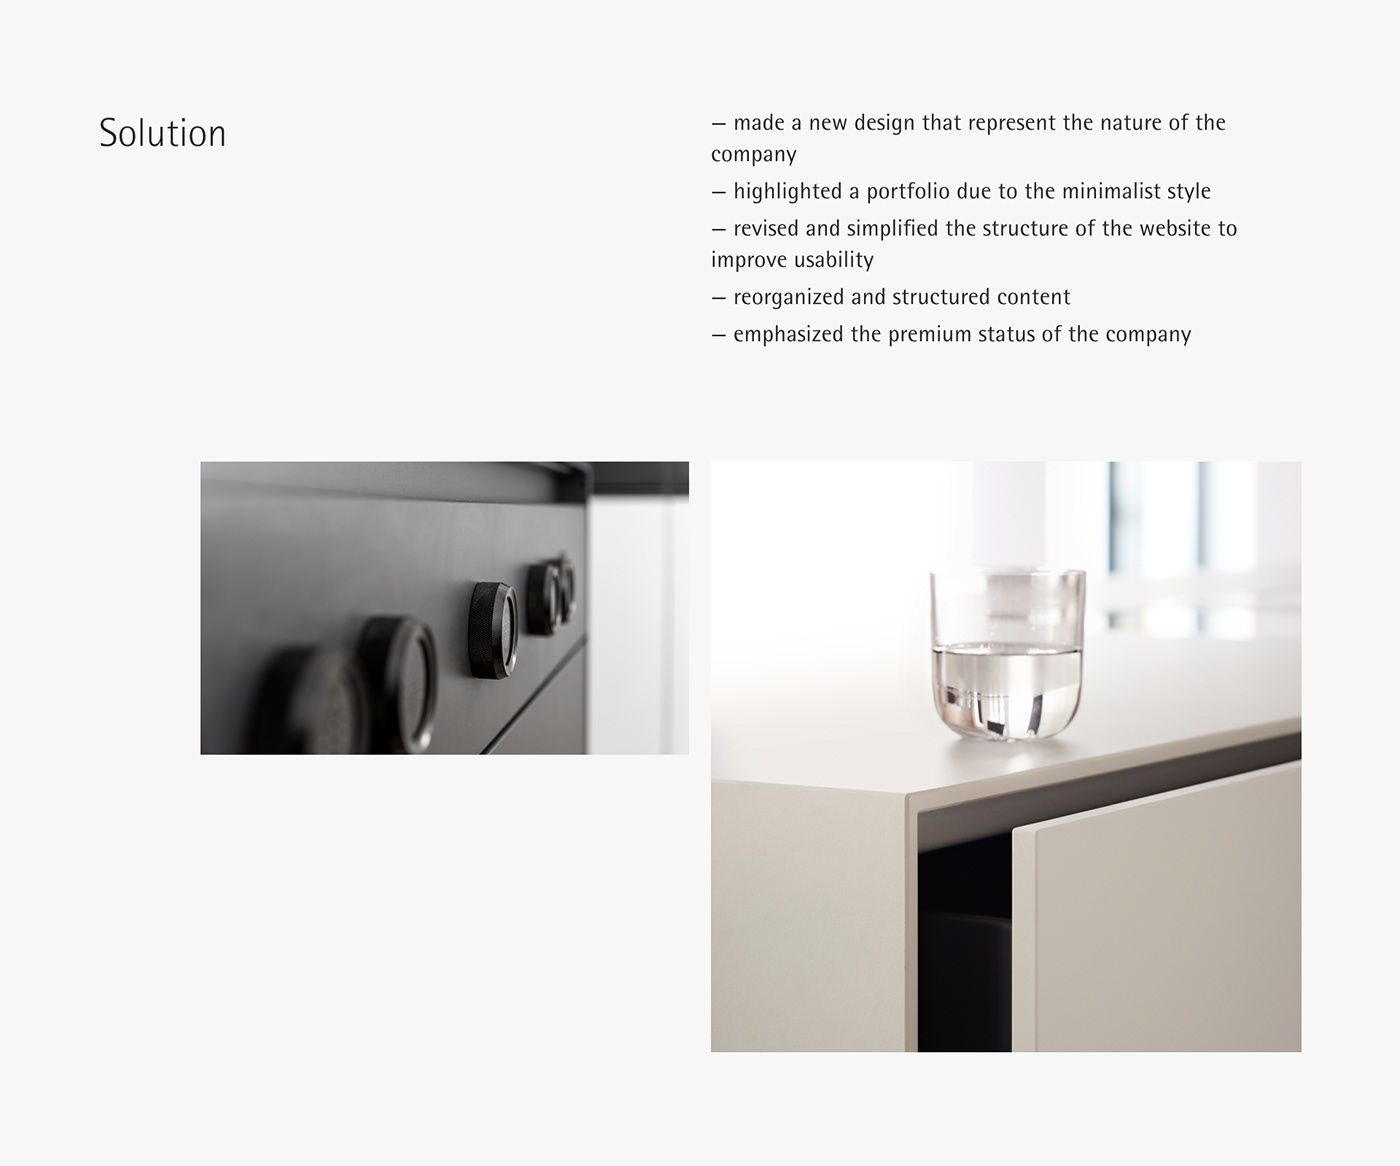 Interior kitchen mobile UI/UX user interface